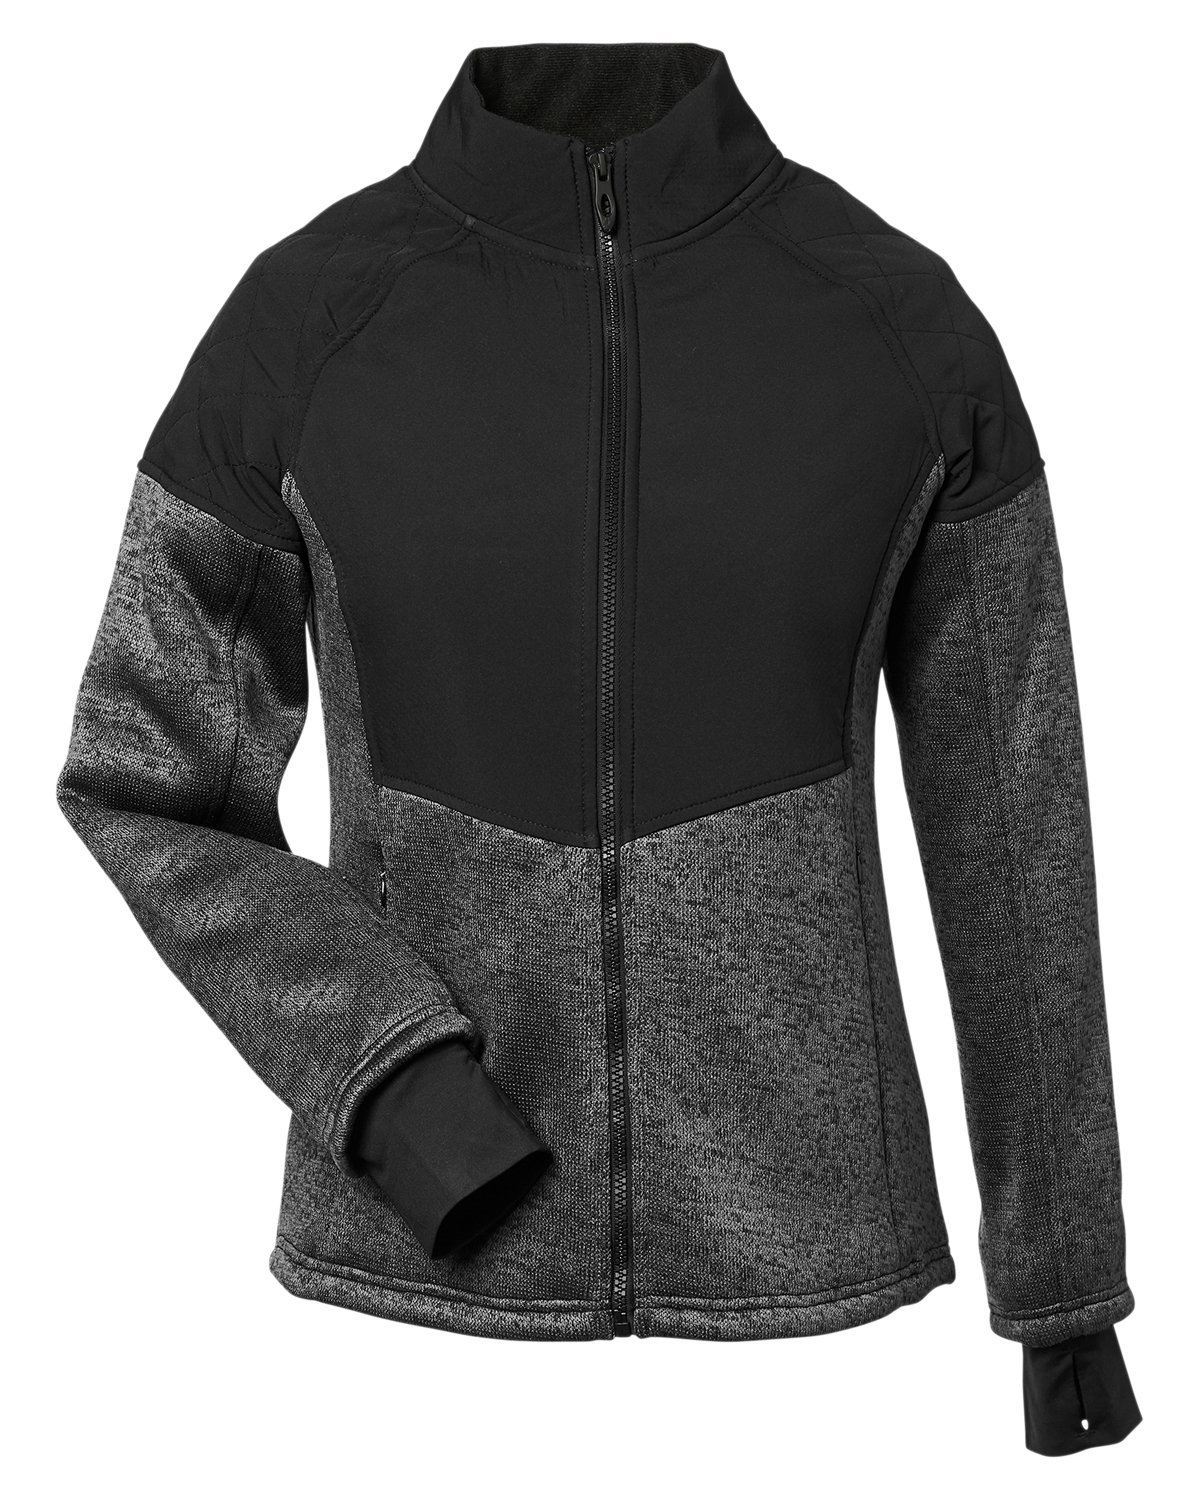 Spyder S17741 - Ladies' Passage Sweater Jacket